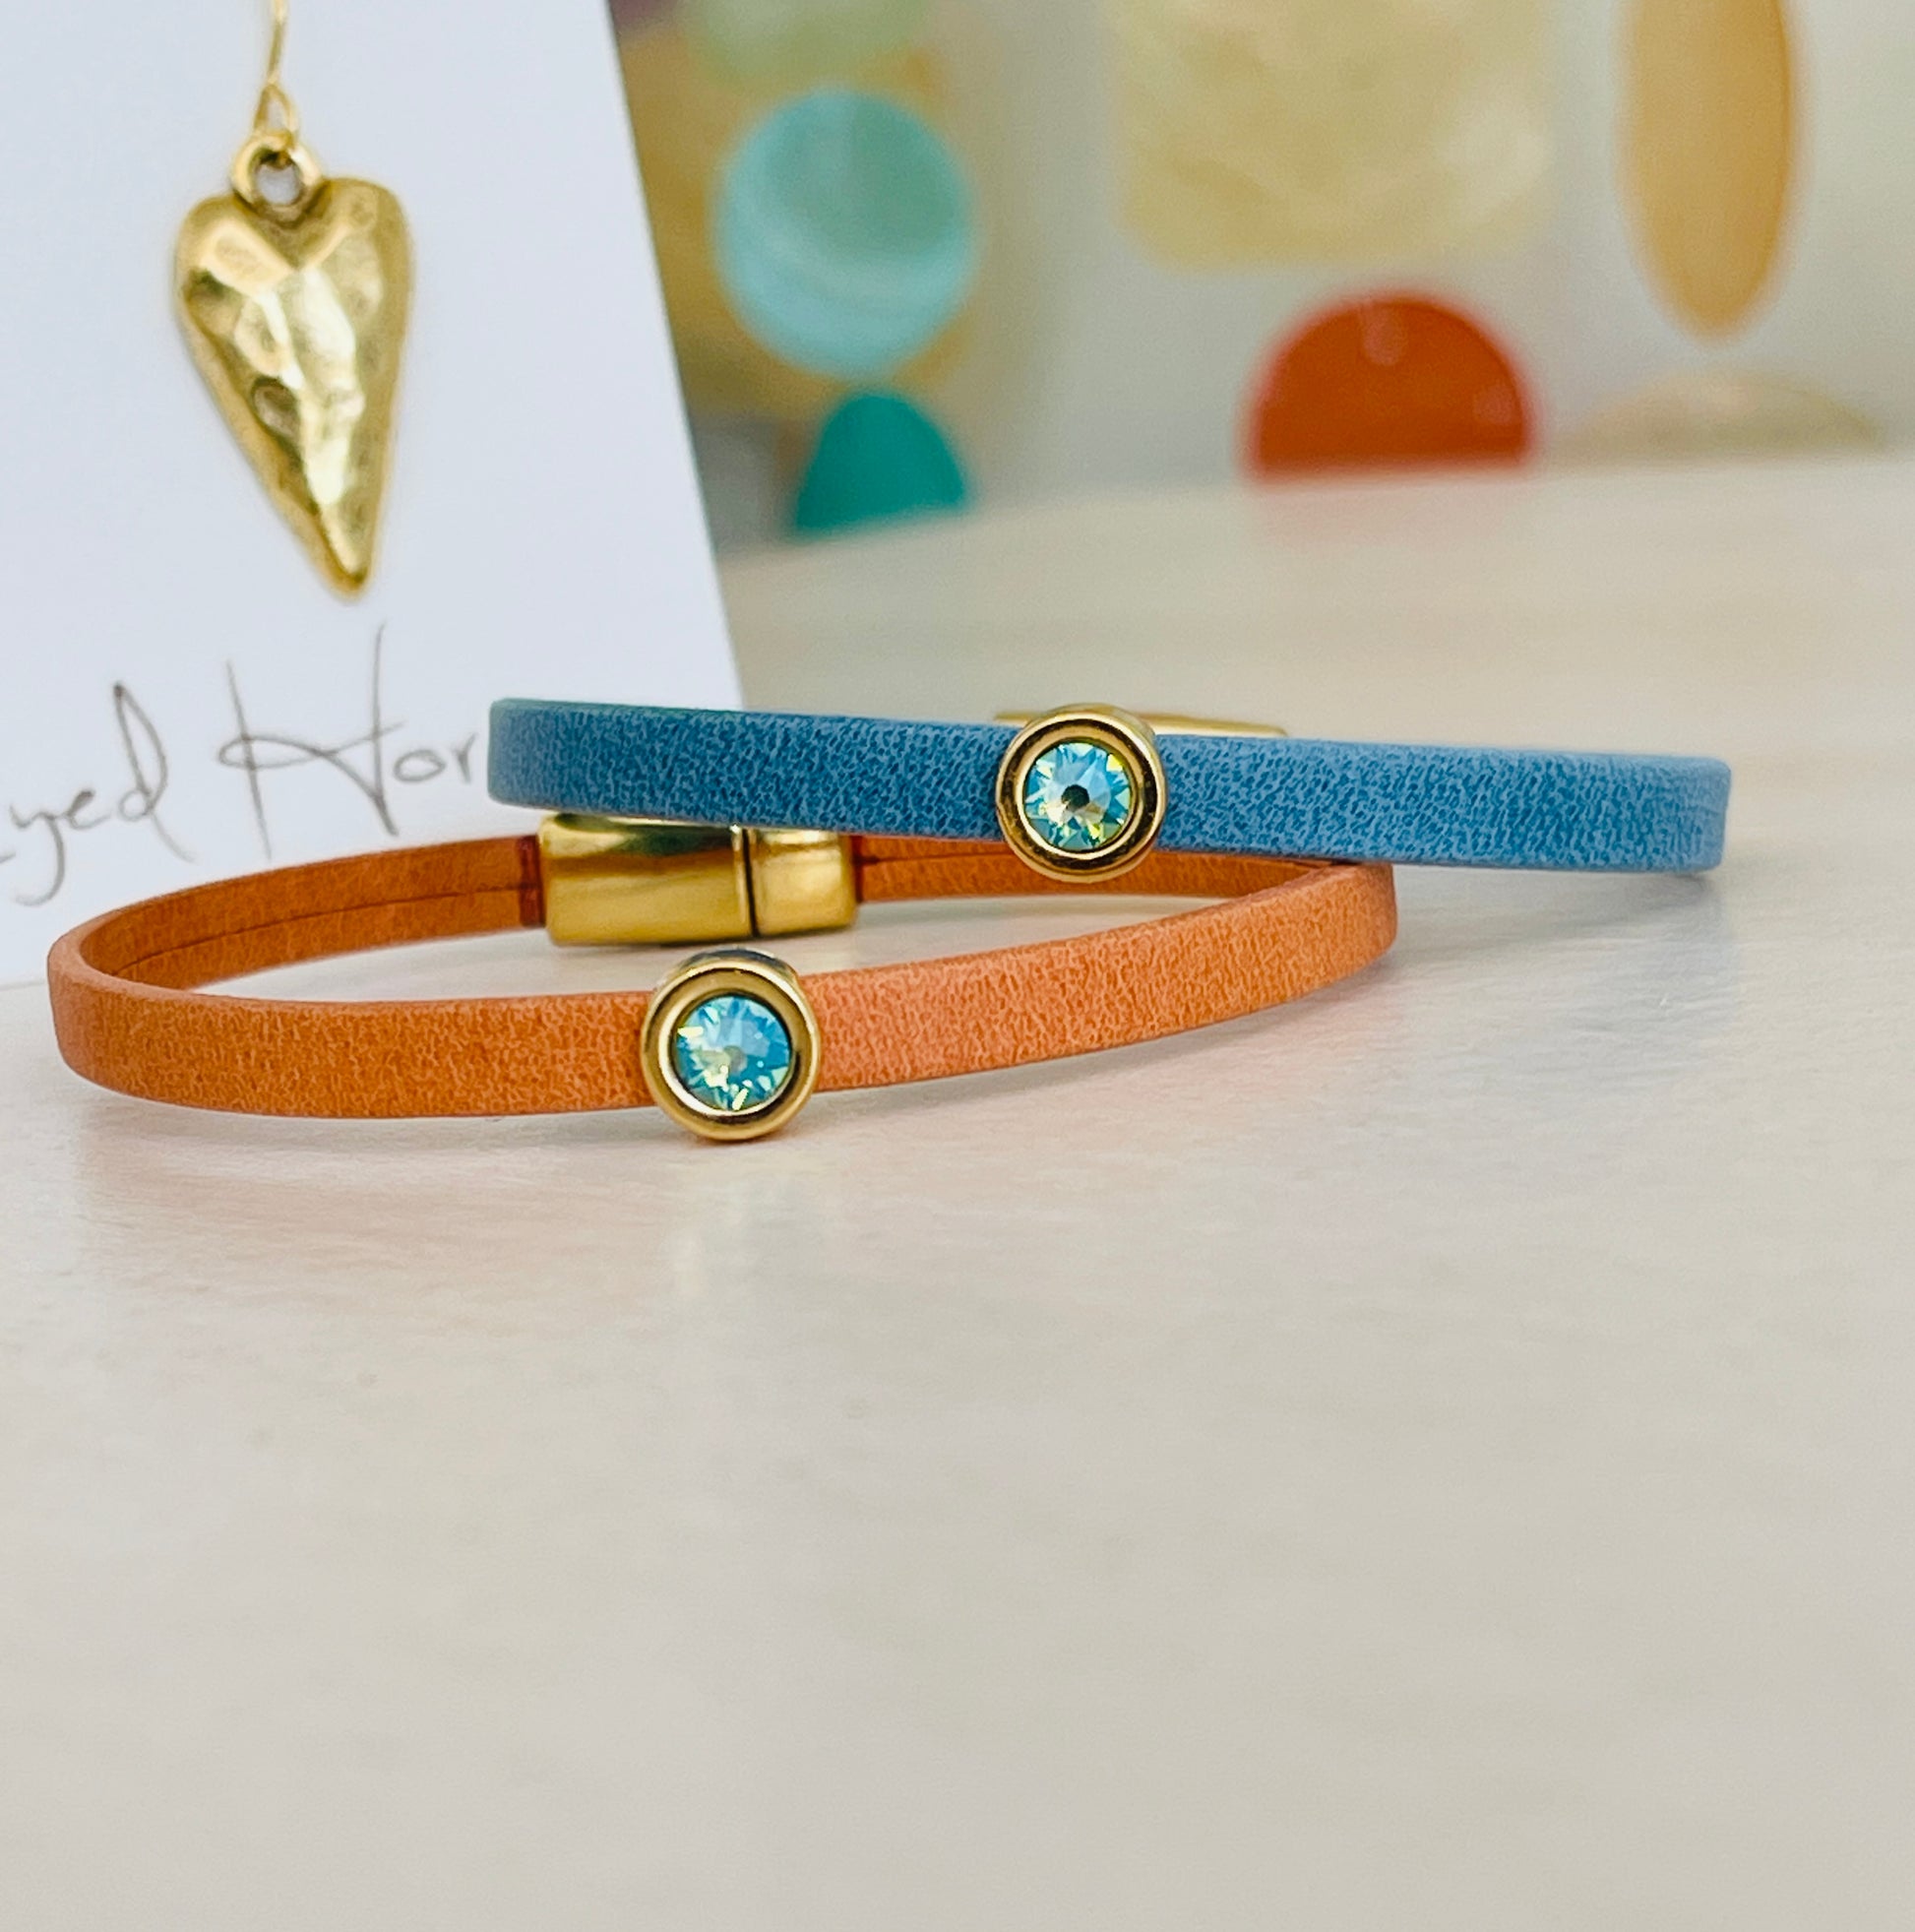 Mini Denim Bracelet and Mini Ginger Bracelet with heart shaped pendant in background